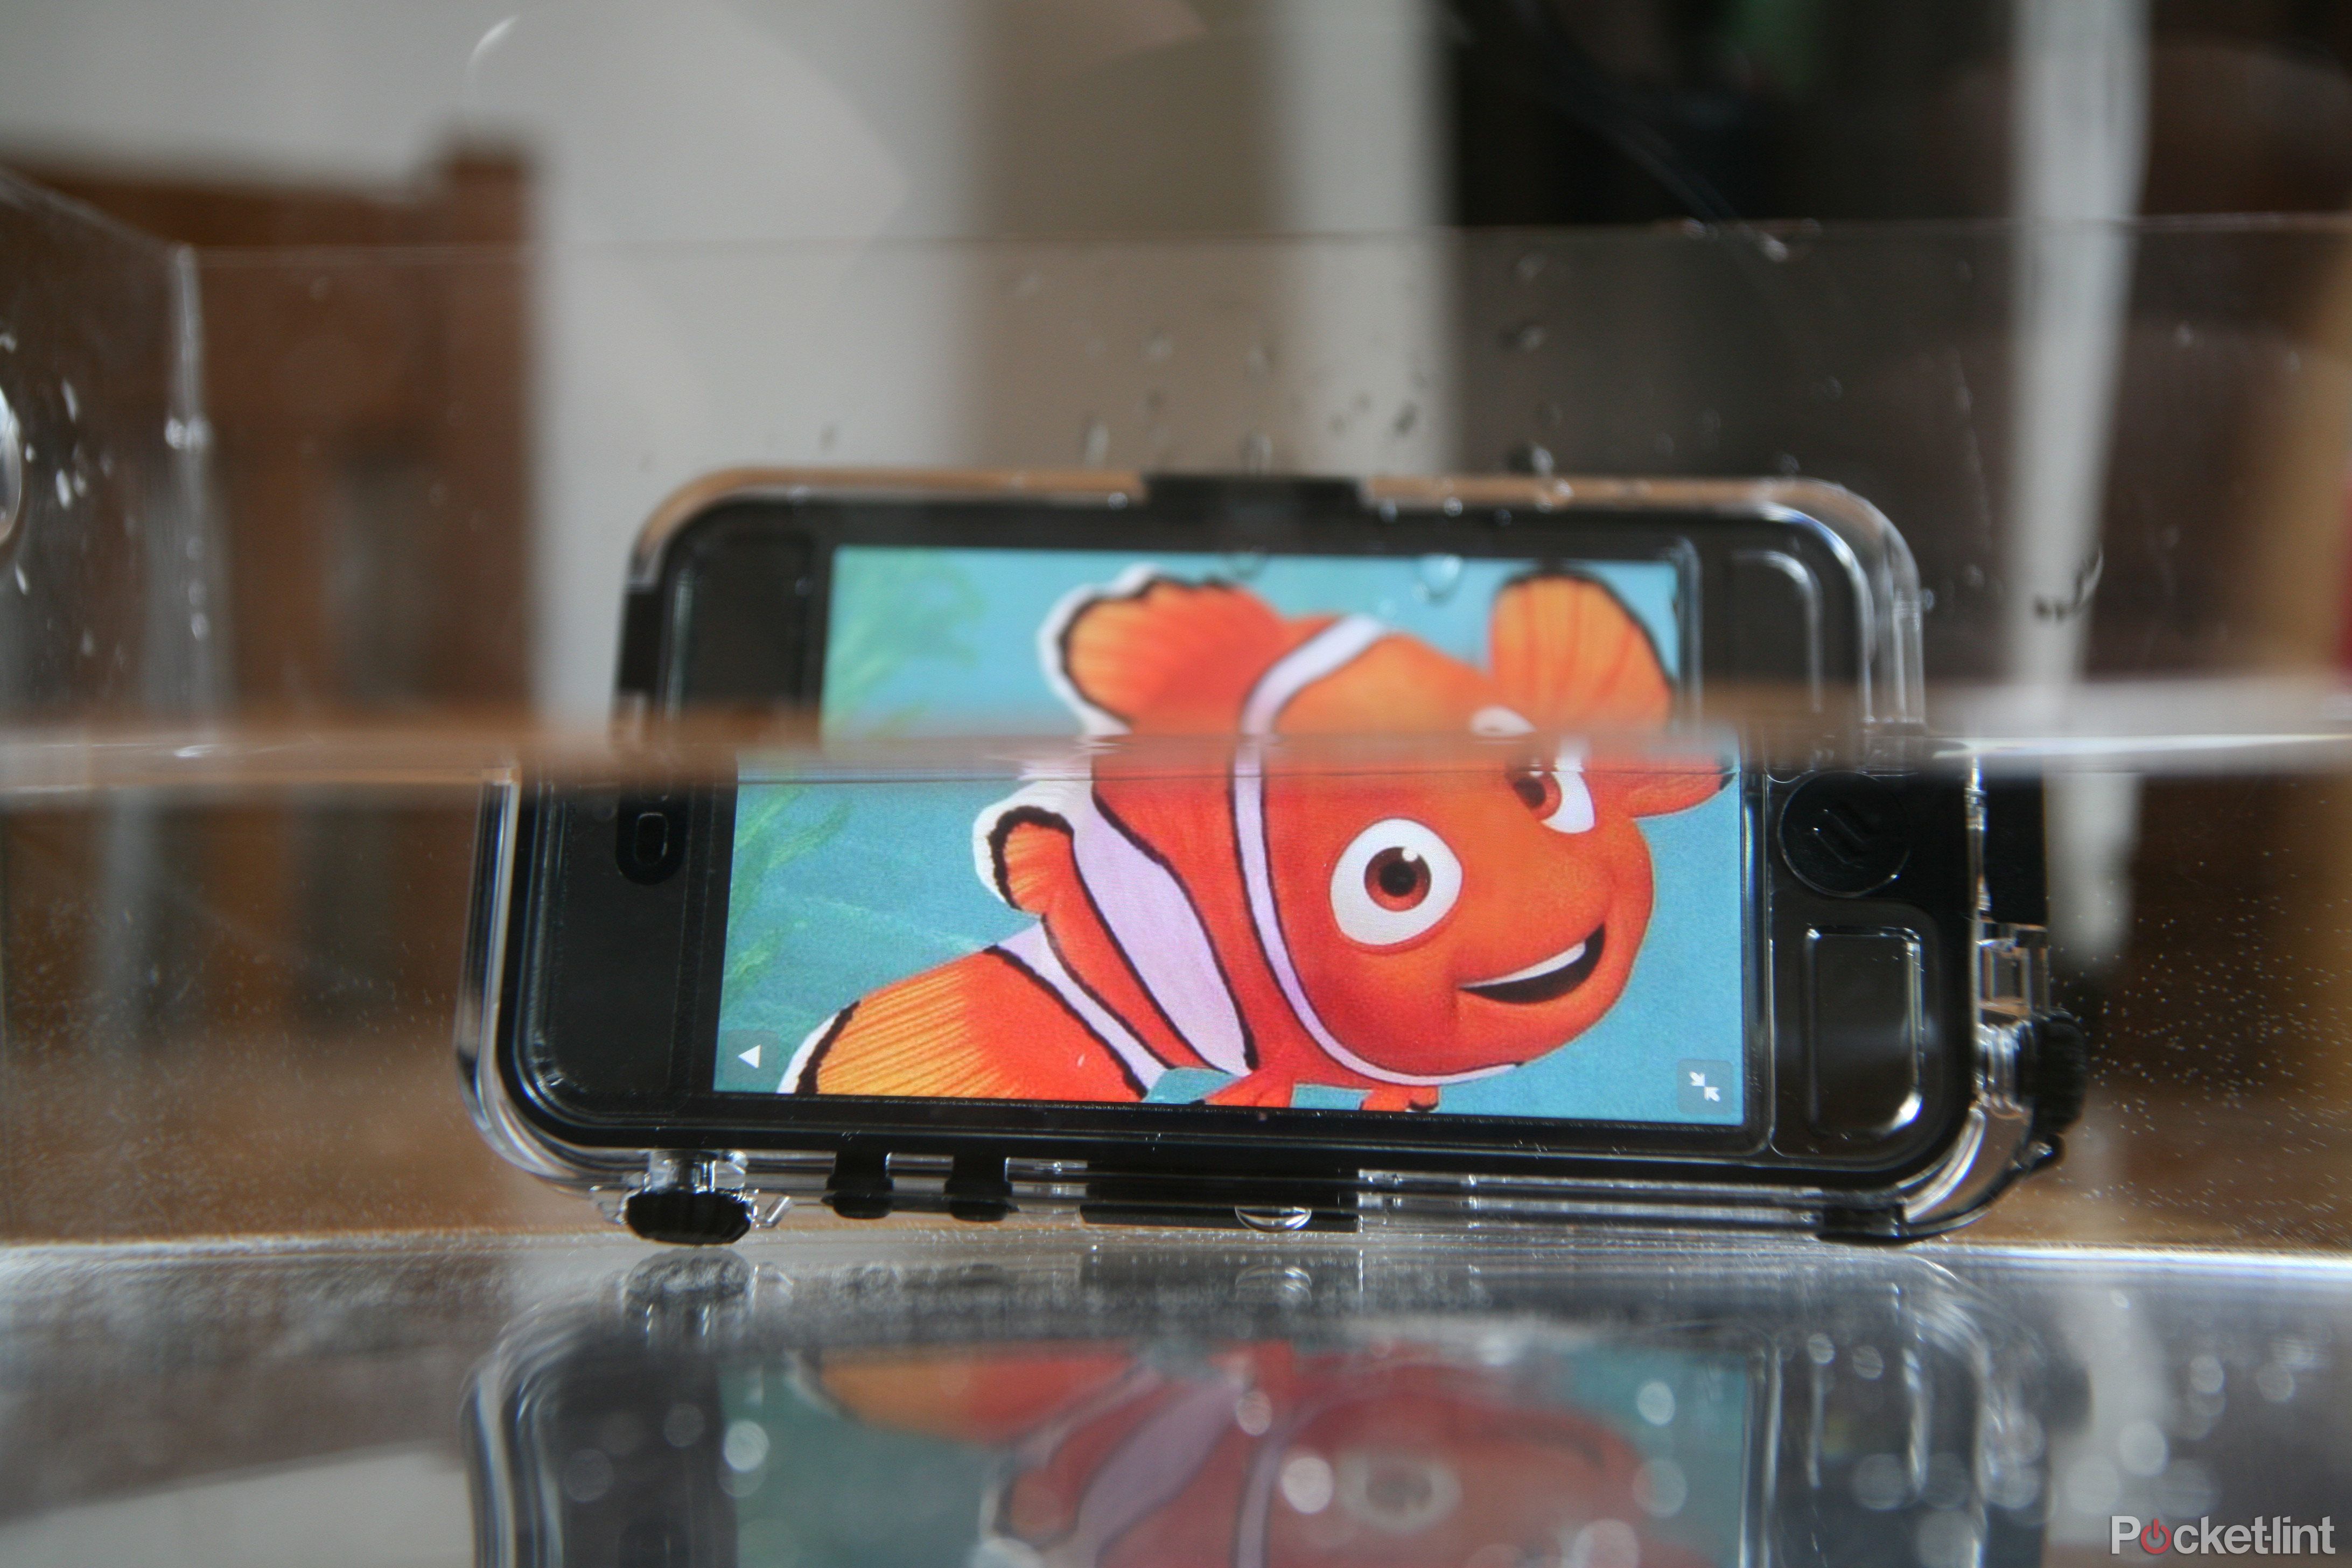 hands on griffin survivor catalyst waterproof iphone 5 case review image 3